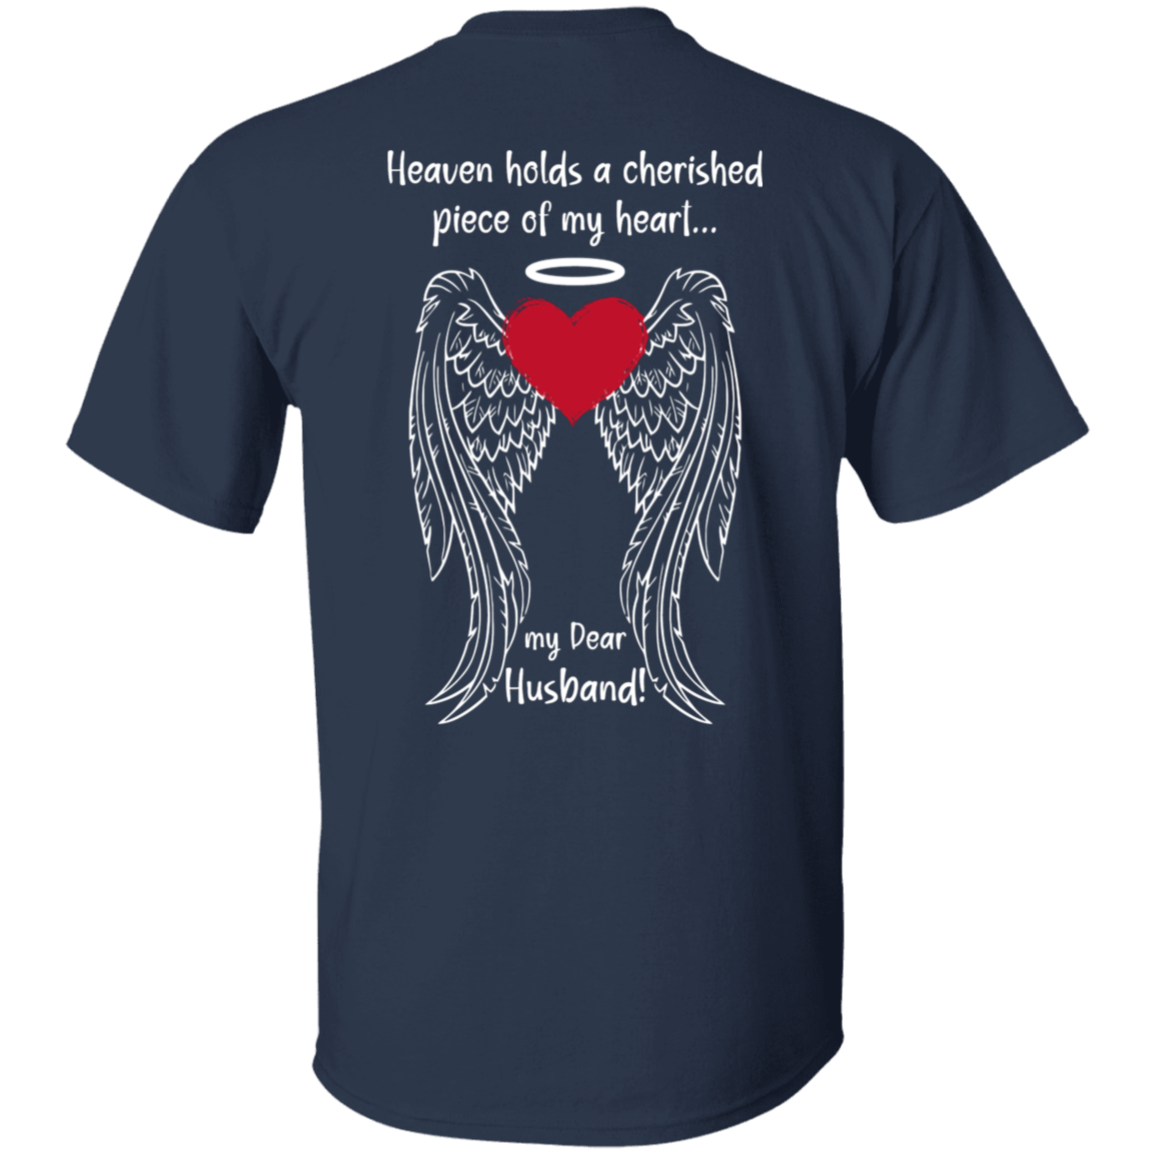 𝗛𝗨𝗦𝗕𝗔𝗡𝗗, HEAVENLY GUARDIAN - Unisex T-Shirt